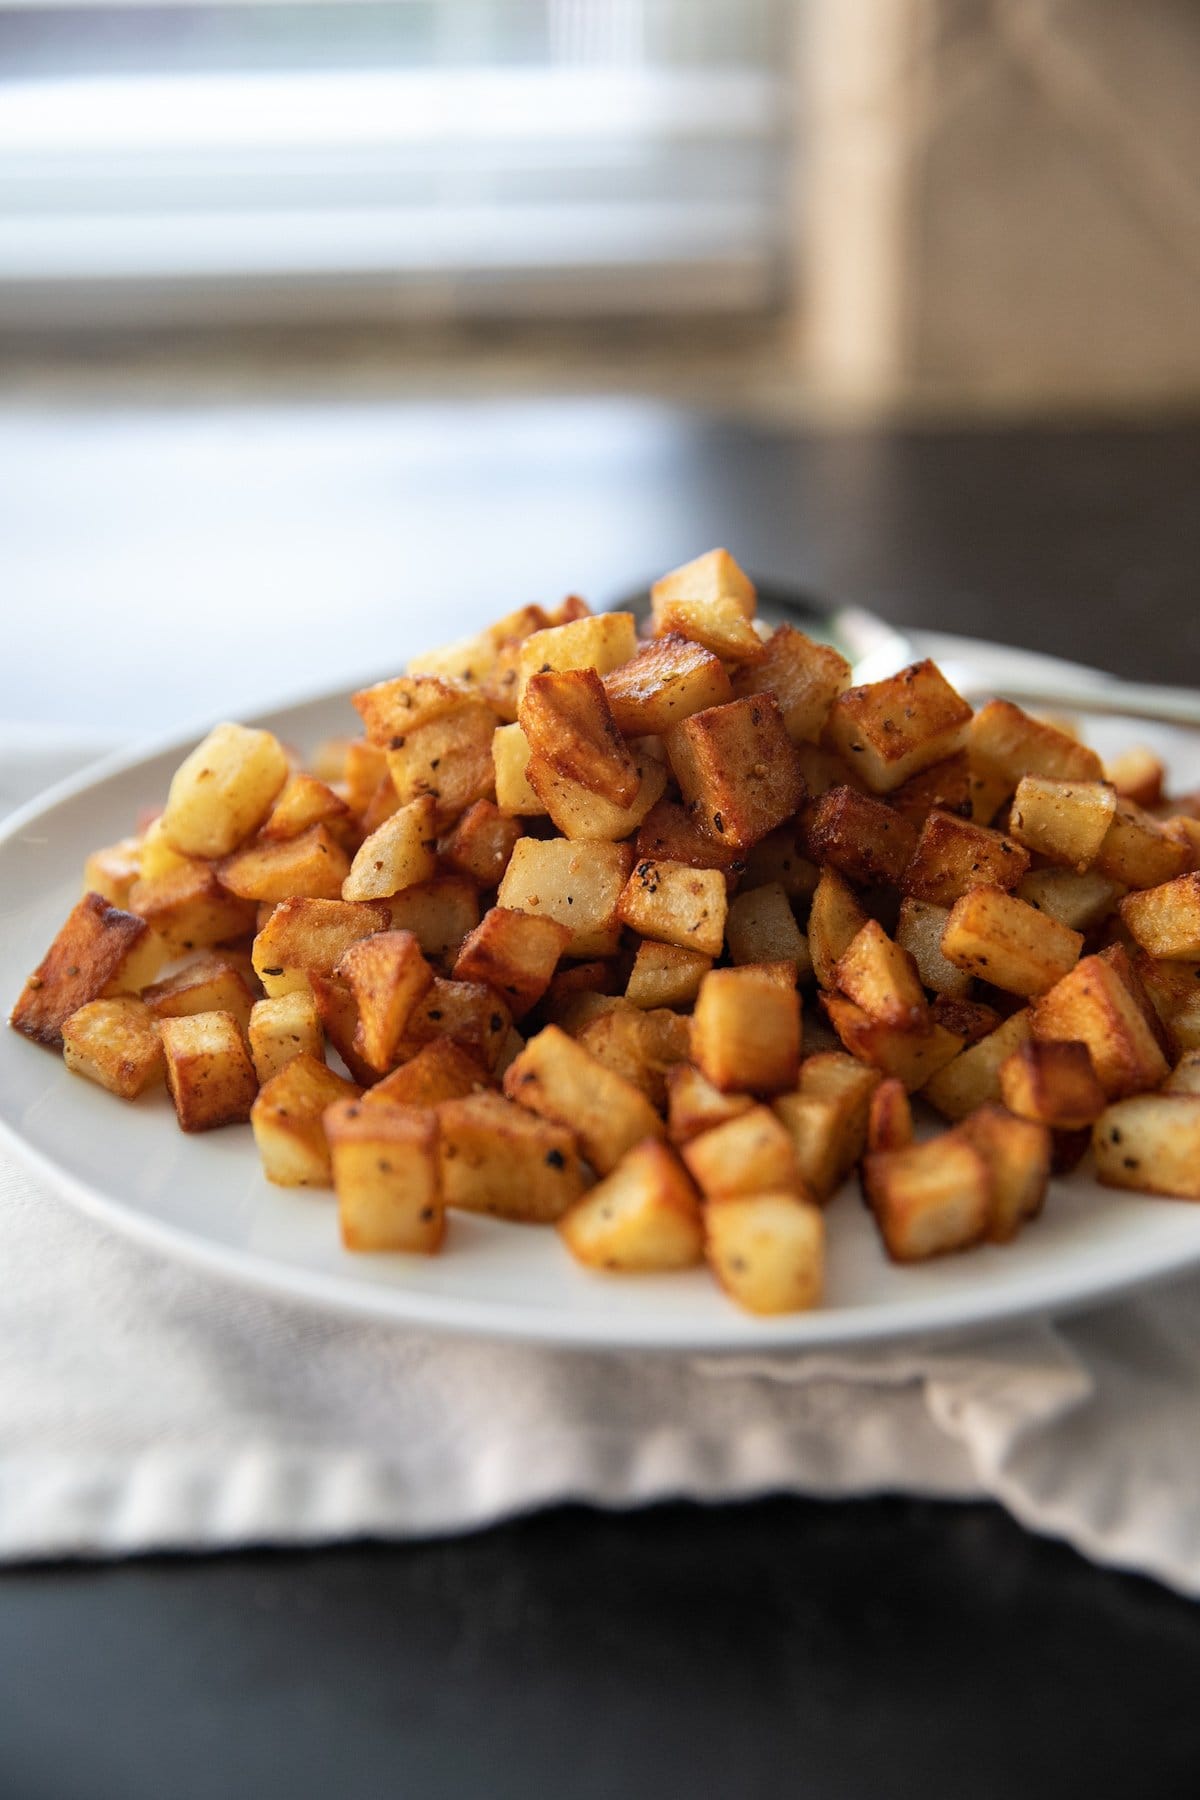 Fried Small Potatoes